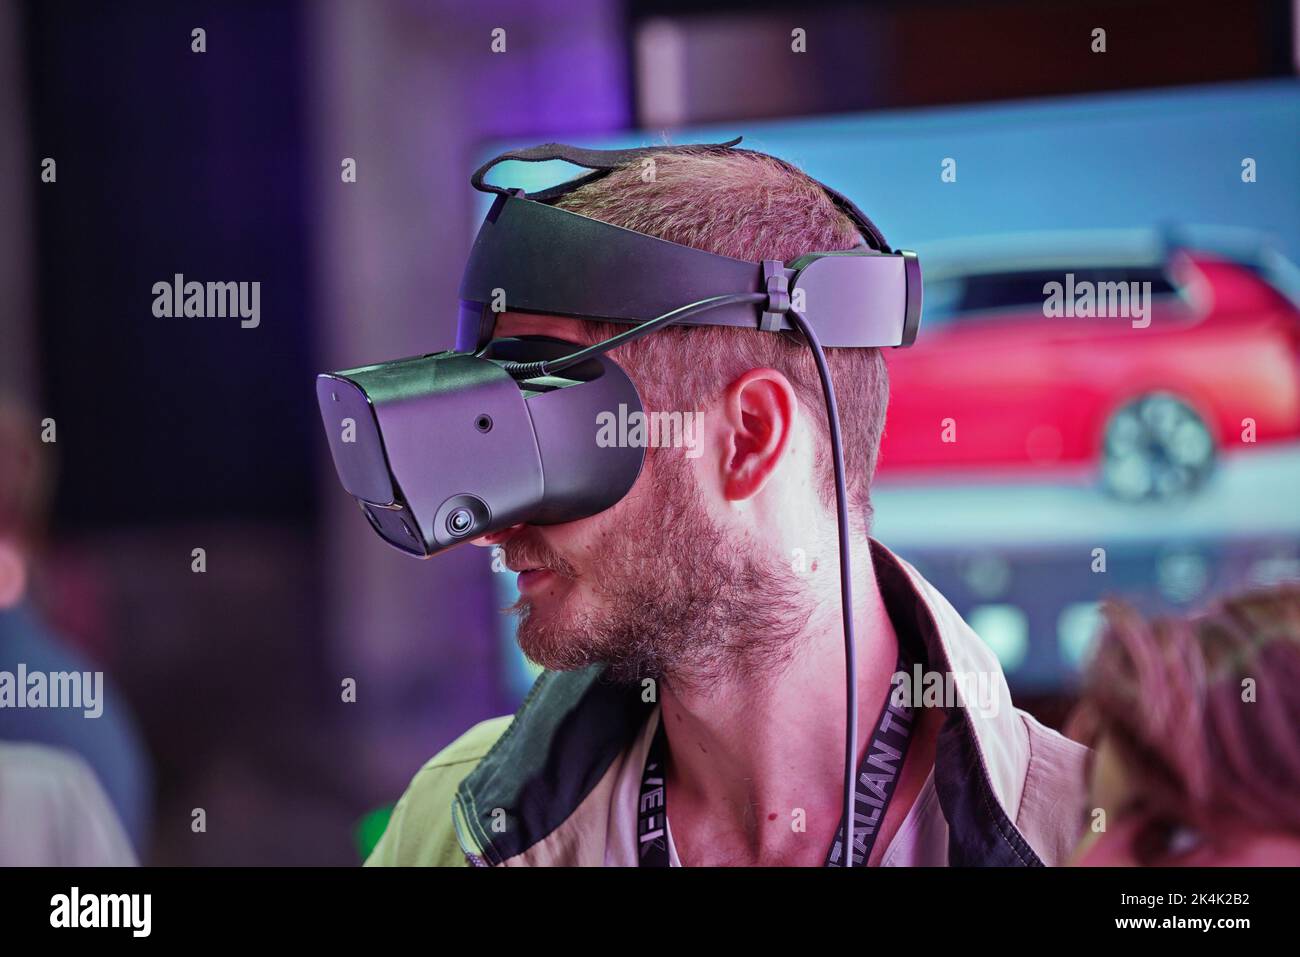 Virtual reality exhibit. Young man wears virtual reality goggles experiences a metaverse encounter. Turin, Italy - September 2022 Stock Photo